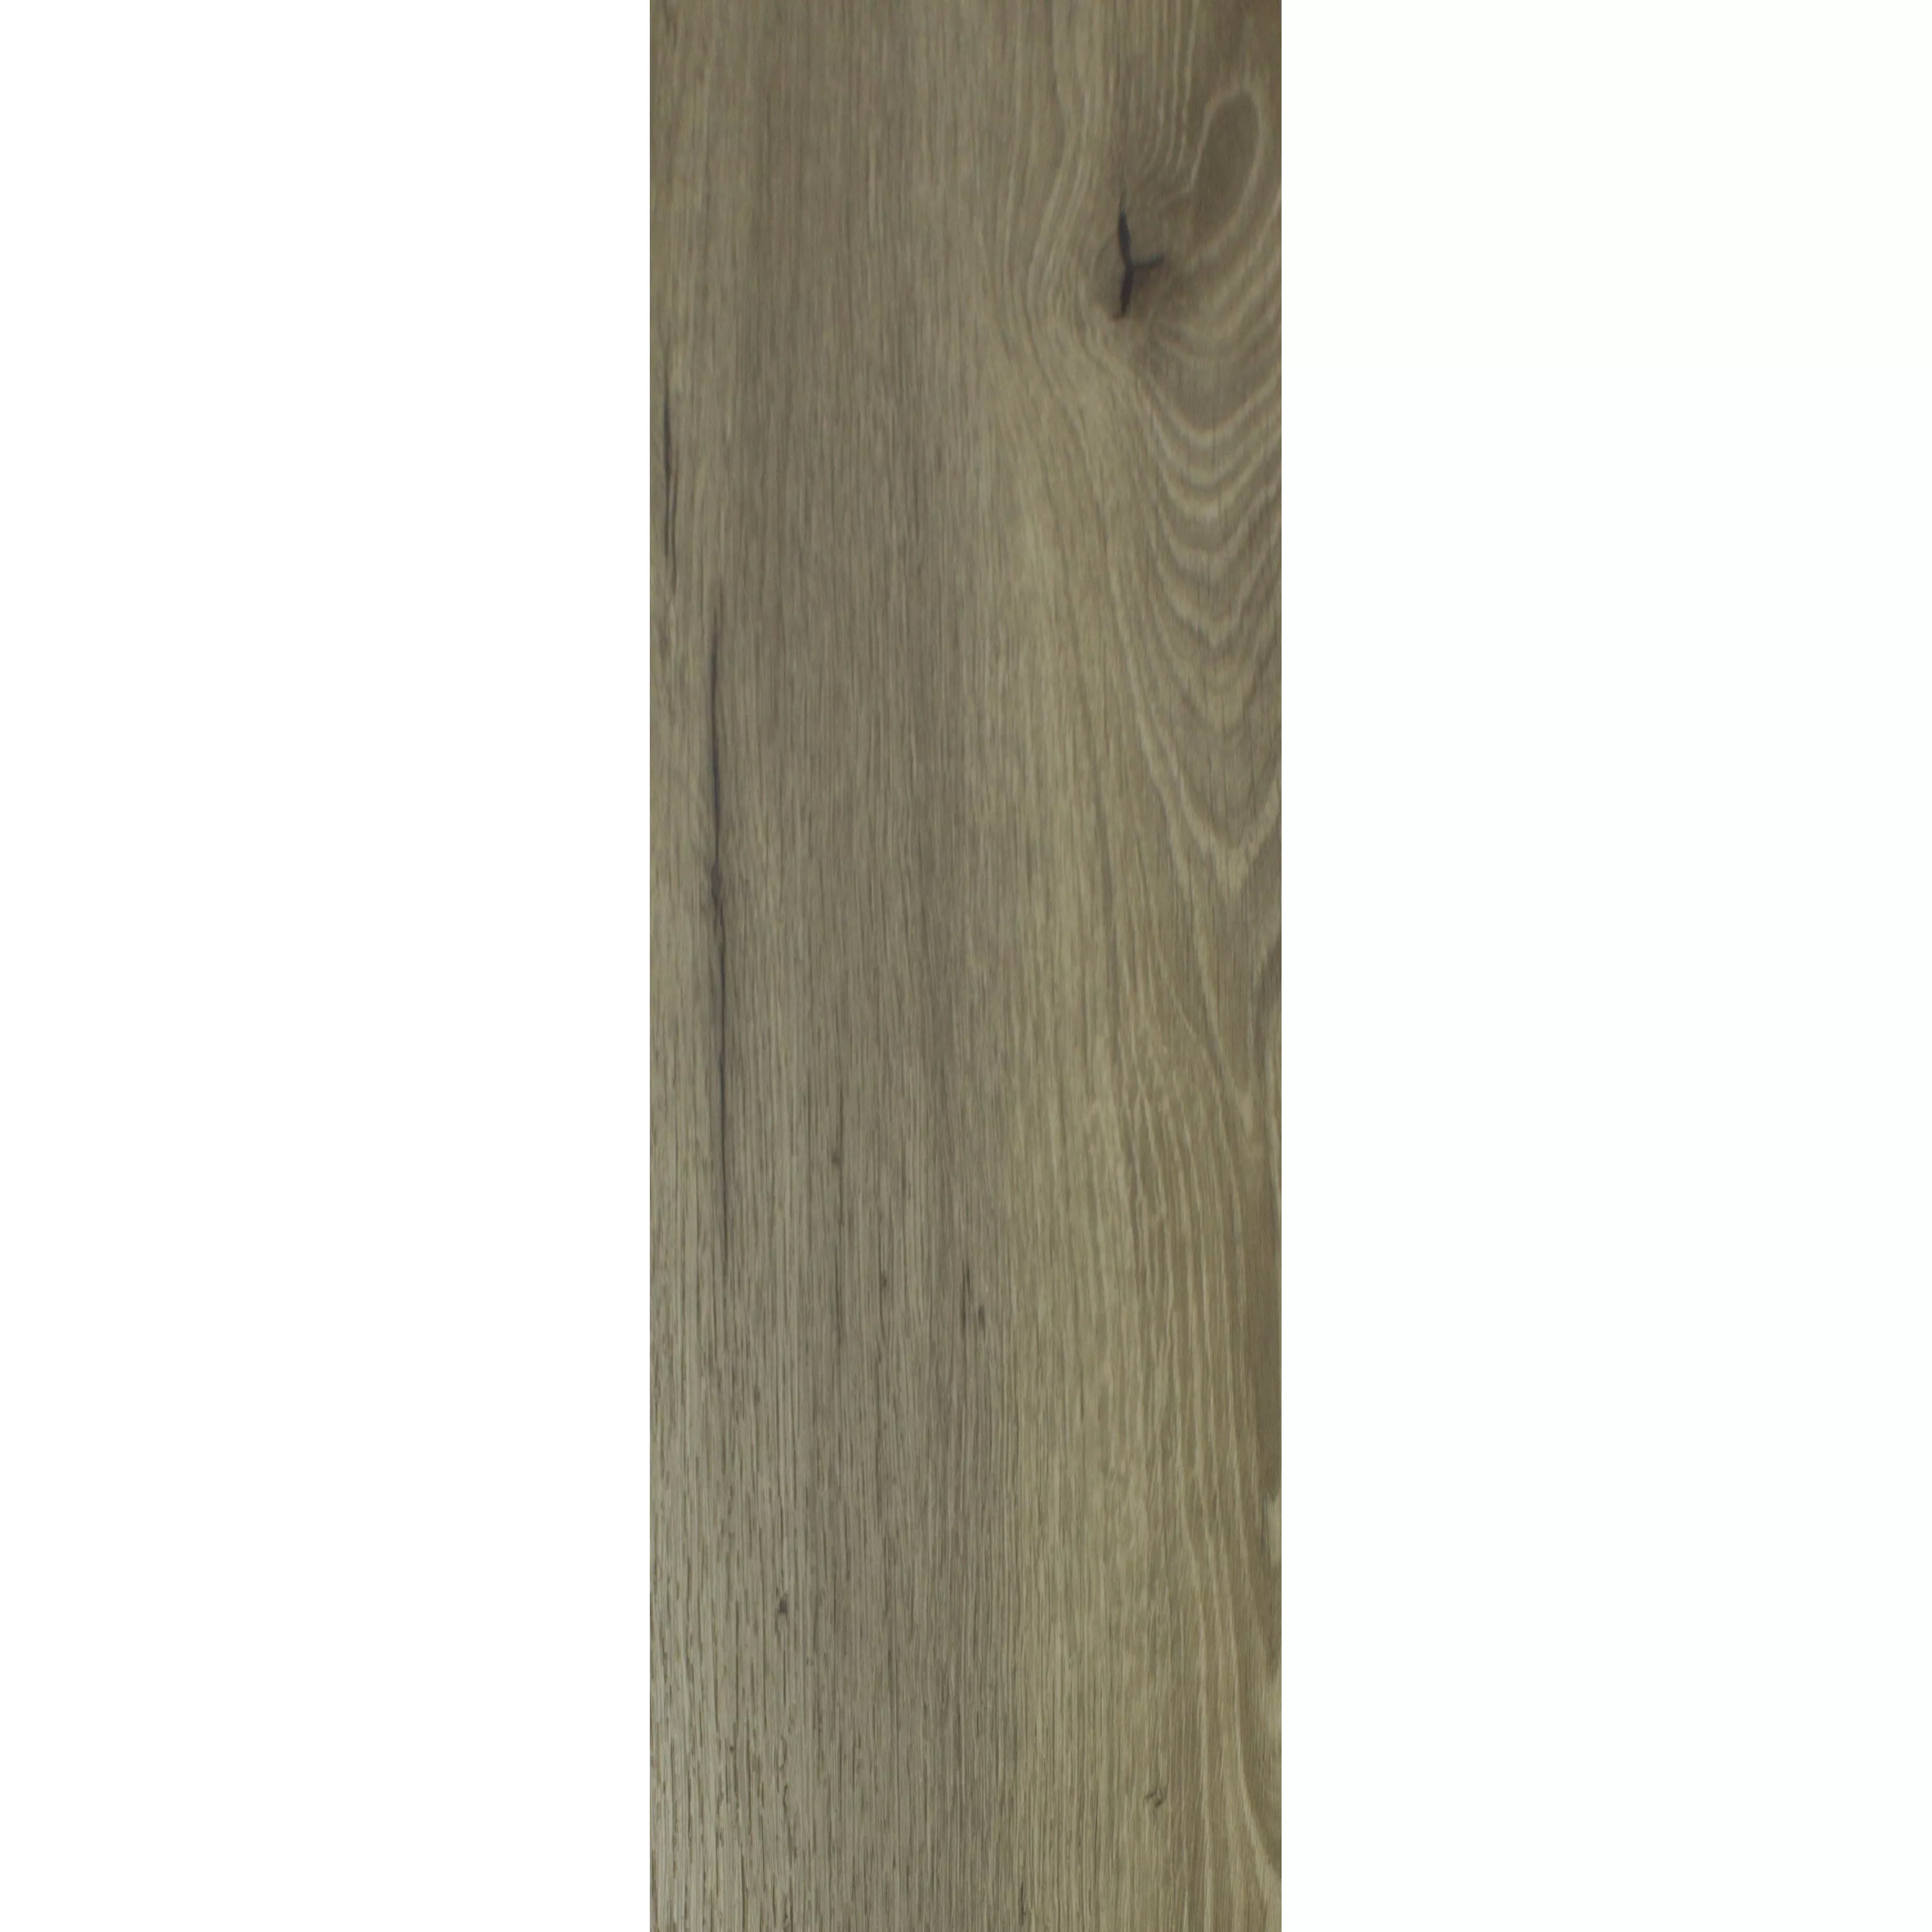 Vinylboden Klebevinyl Newcastle 23,2x122,7cm Braun